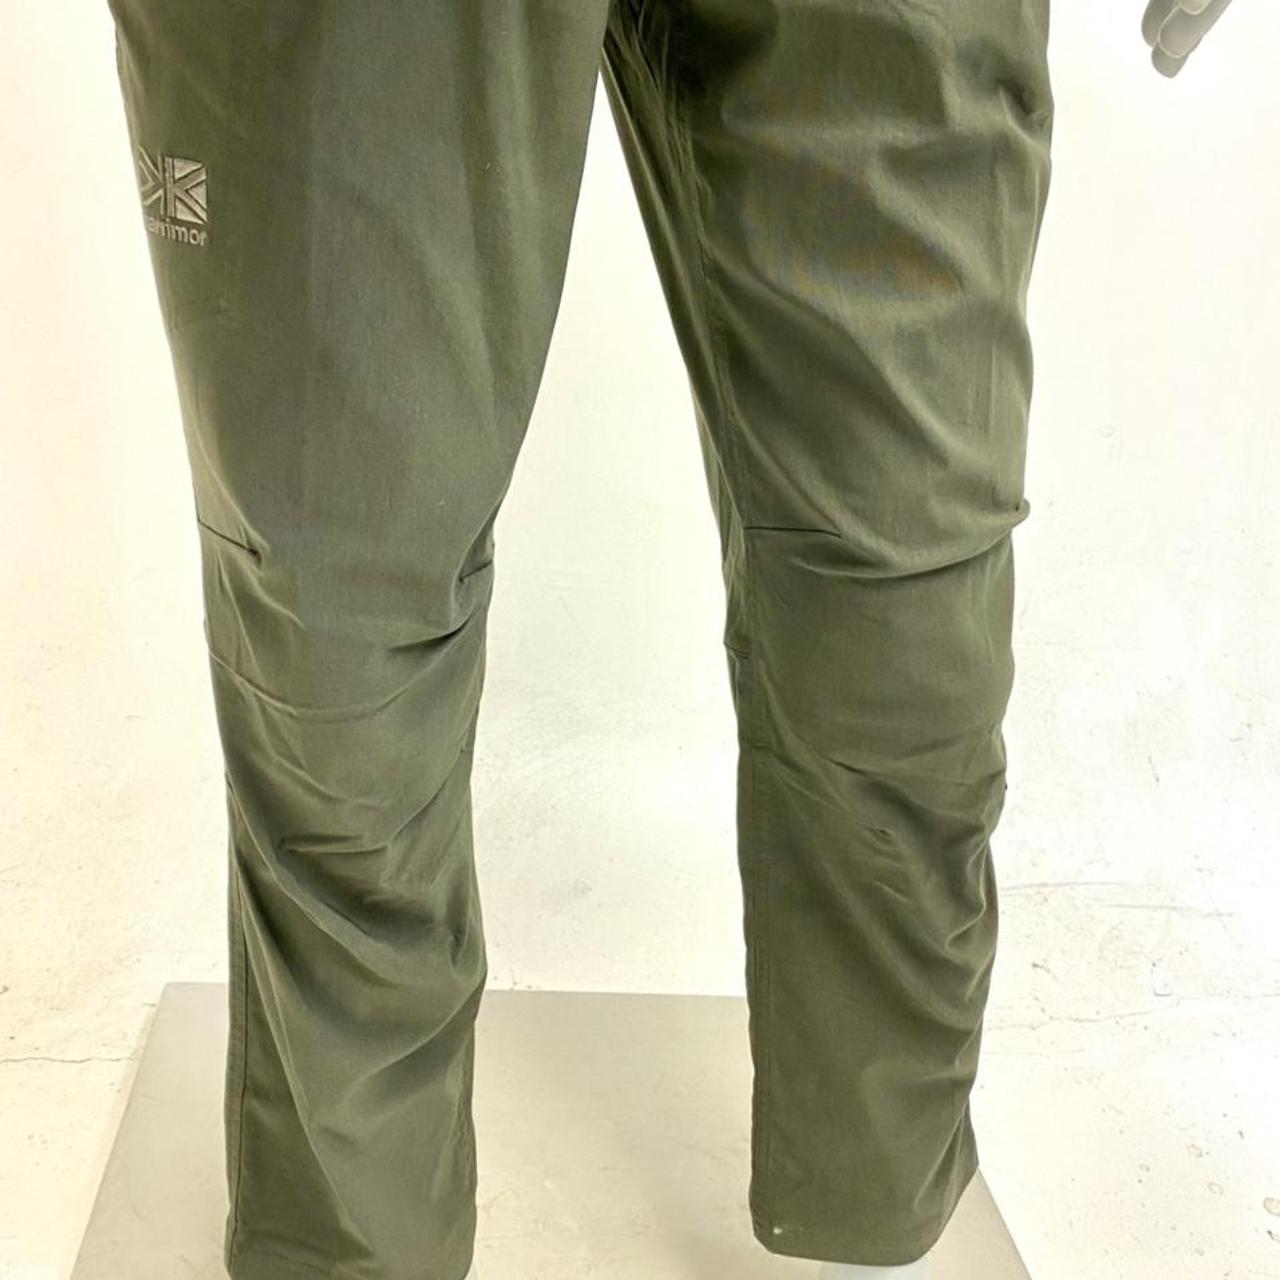 Shop Karrimor Men's Walking Trousers up to 70% Off | DealDoodle